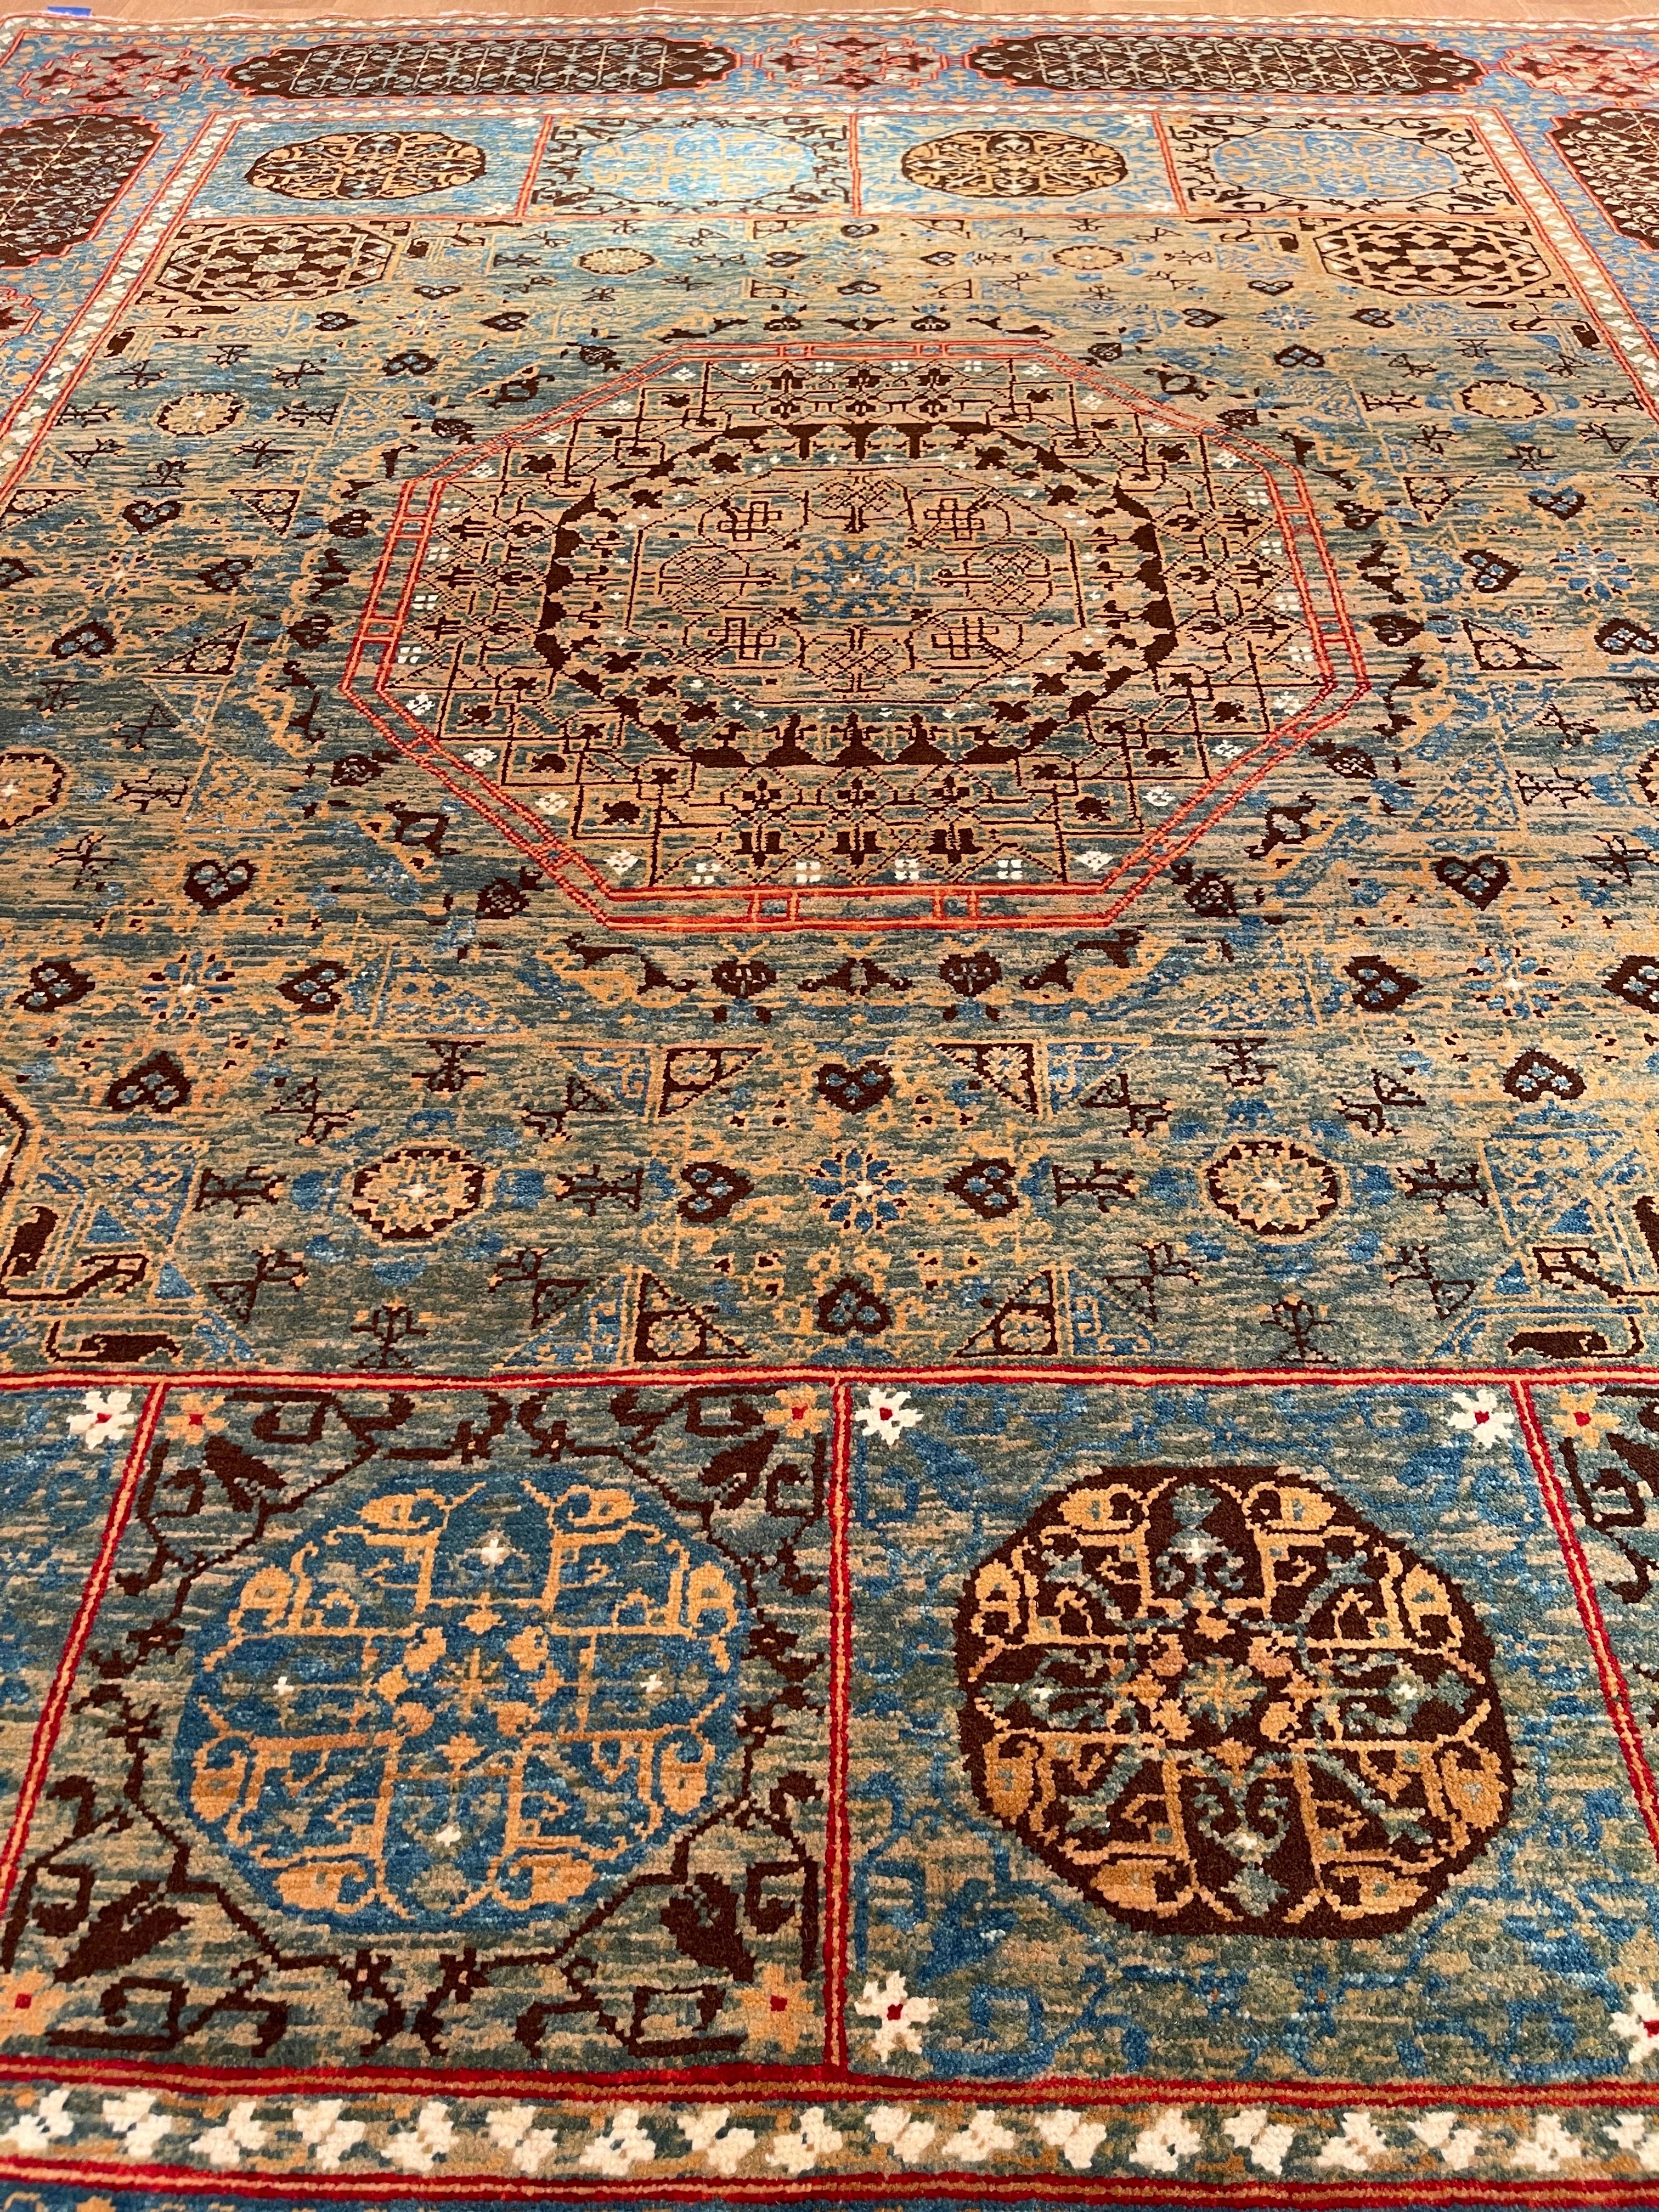 Contemporary Ararat Rugs the Simonetti Mamluk Carpet 16th Century Revival, Natural Dyed For Sale